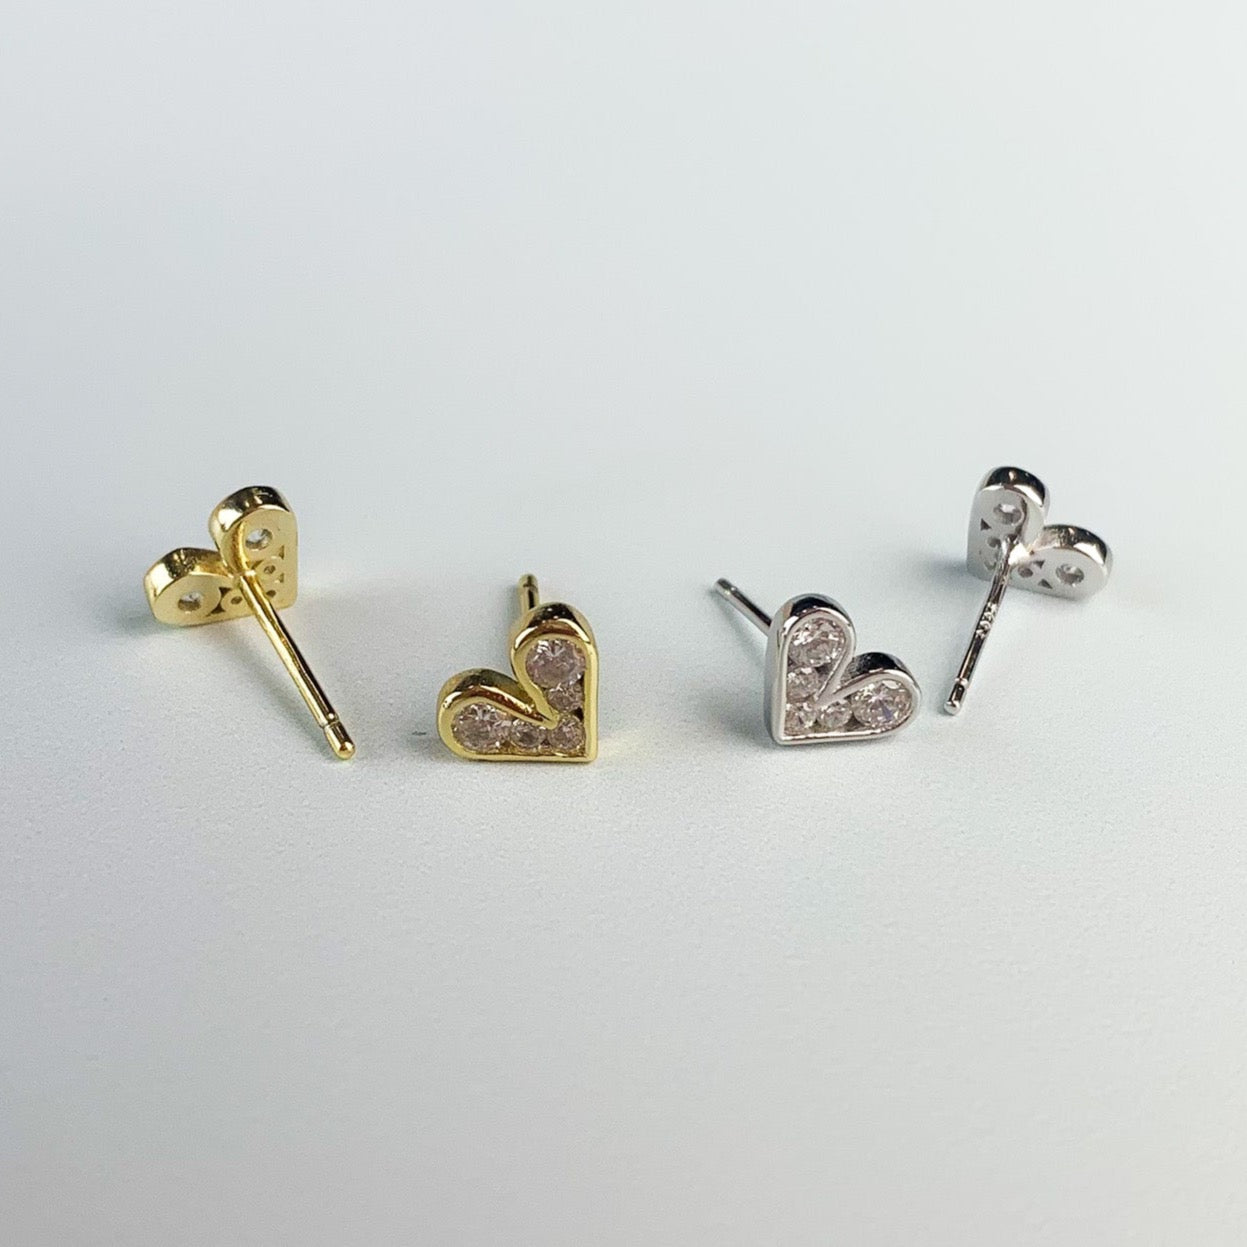 Tiny Crystal Heart Stud Earrings